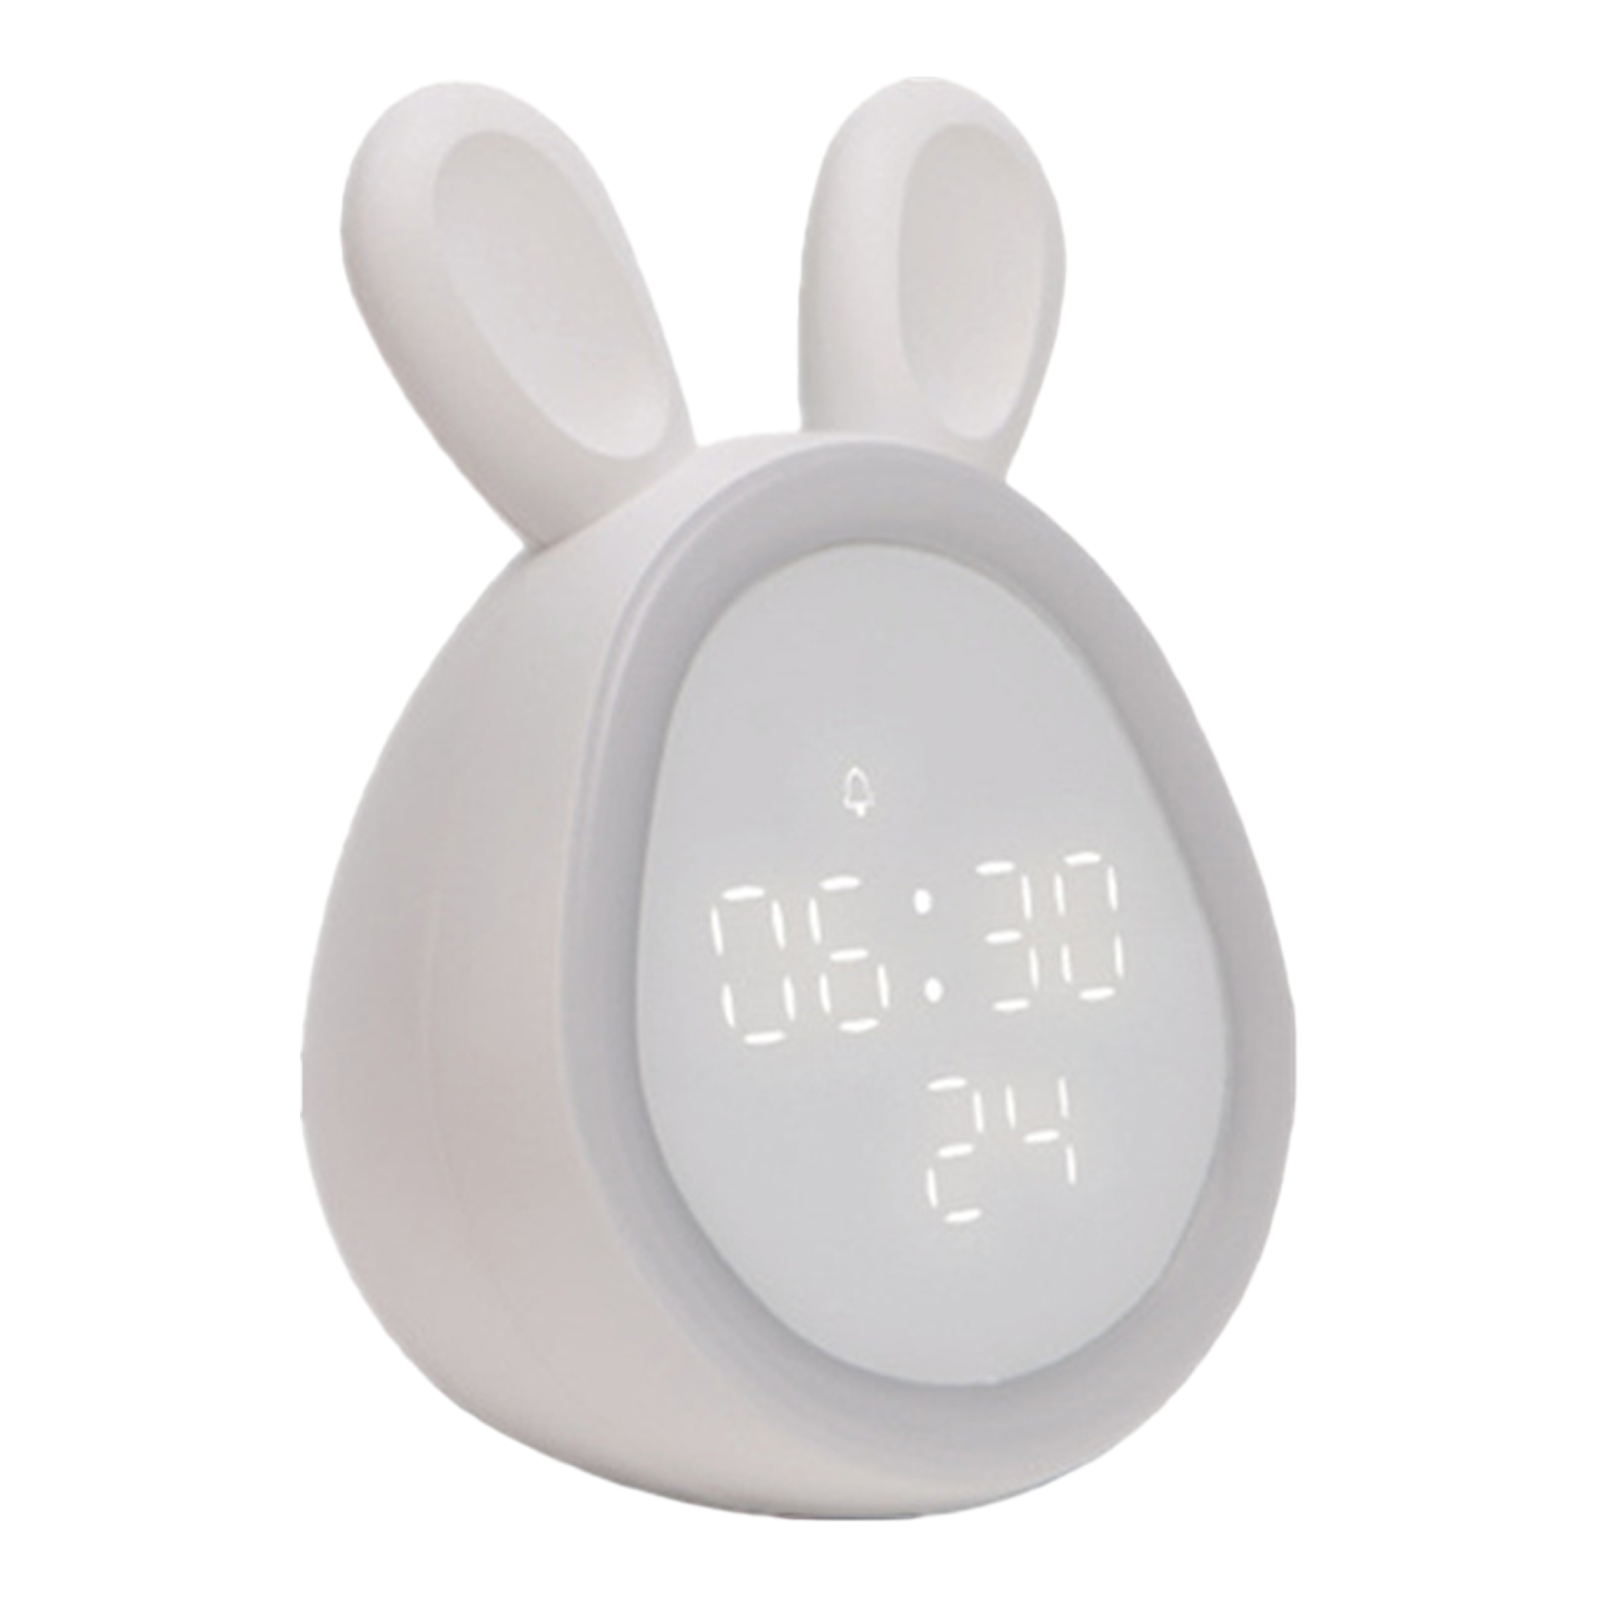 Cute Rabbit Alarm Clock Rechargeable Adjustable Brightness Led Luminous Digital Clock With Temperature Display